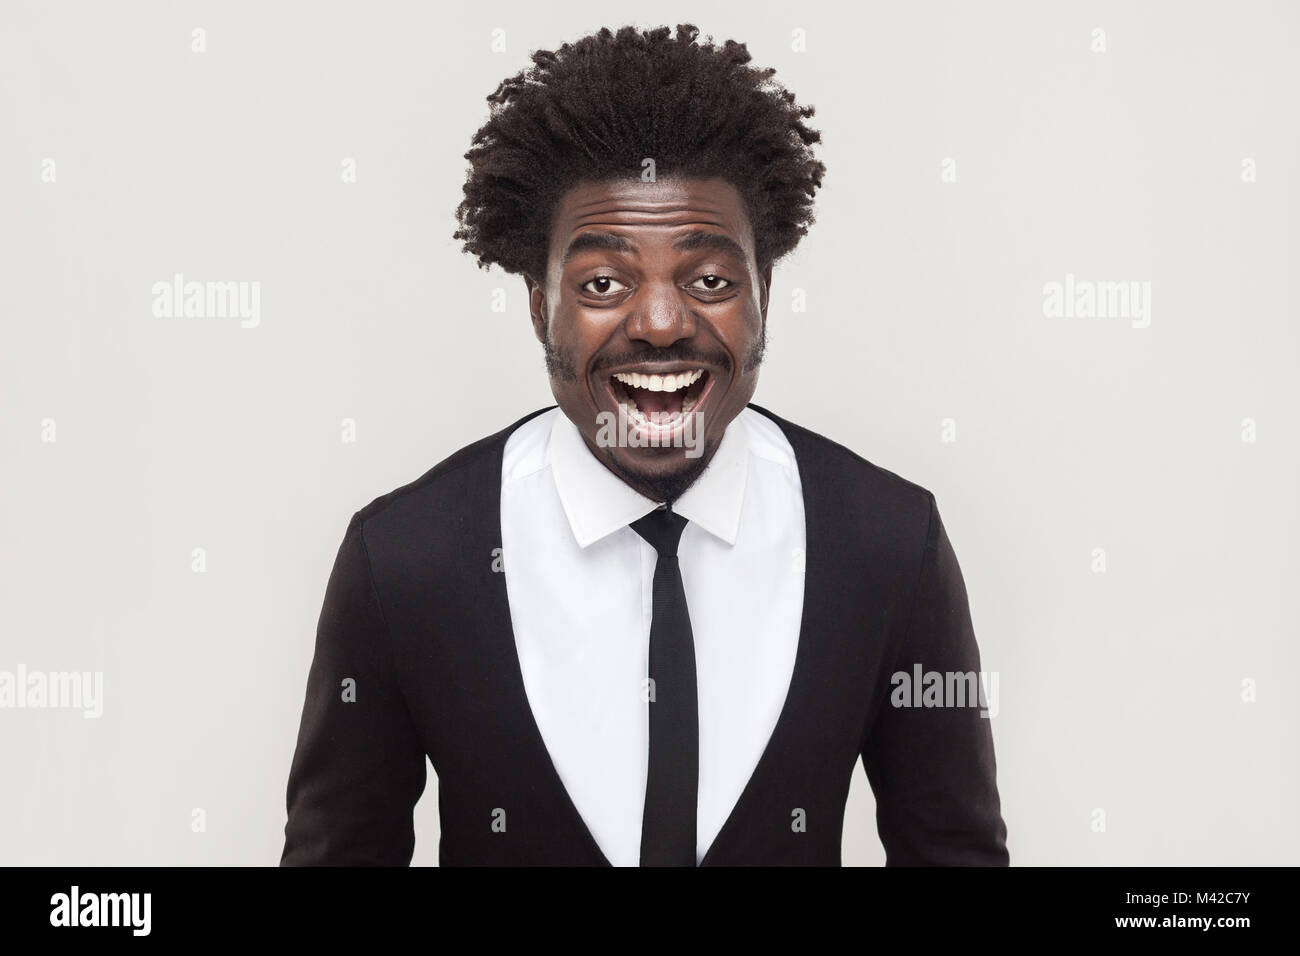 Ridendo afro imprenditore guardando la fotocamera e toothy sorridente. Studio shot, sfondo grigio Foto Stock